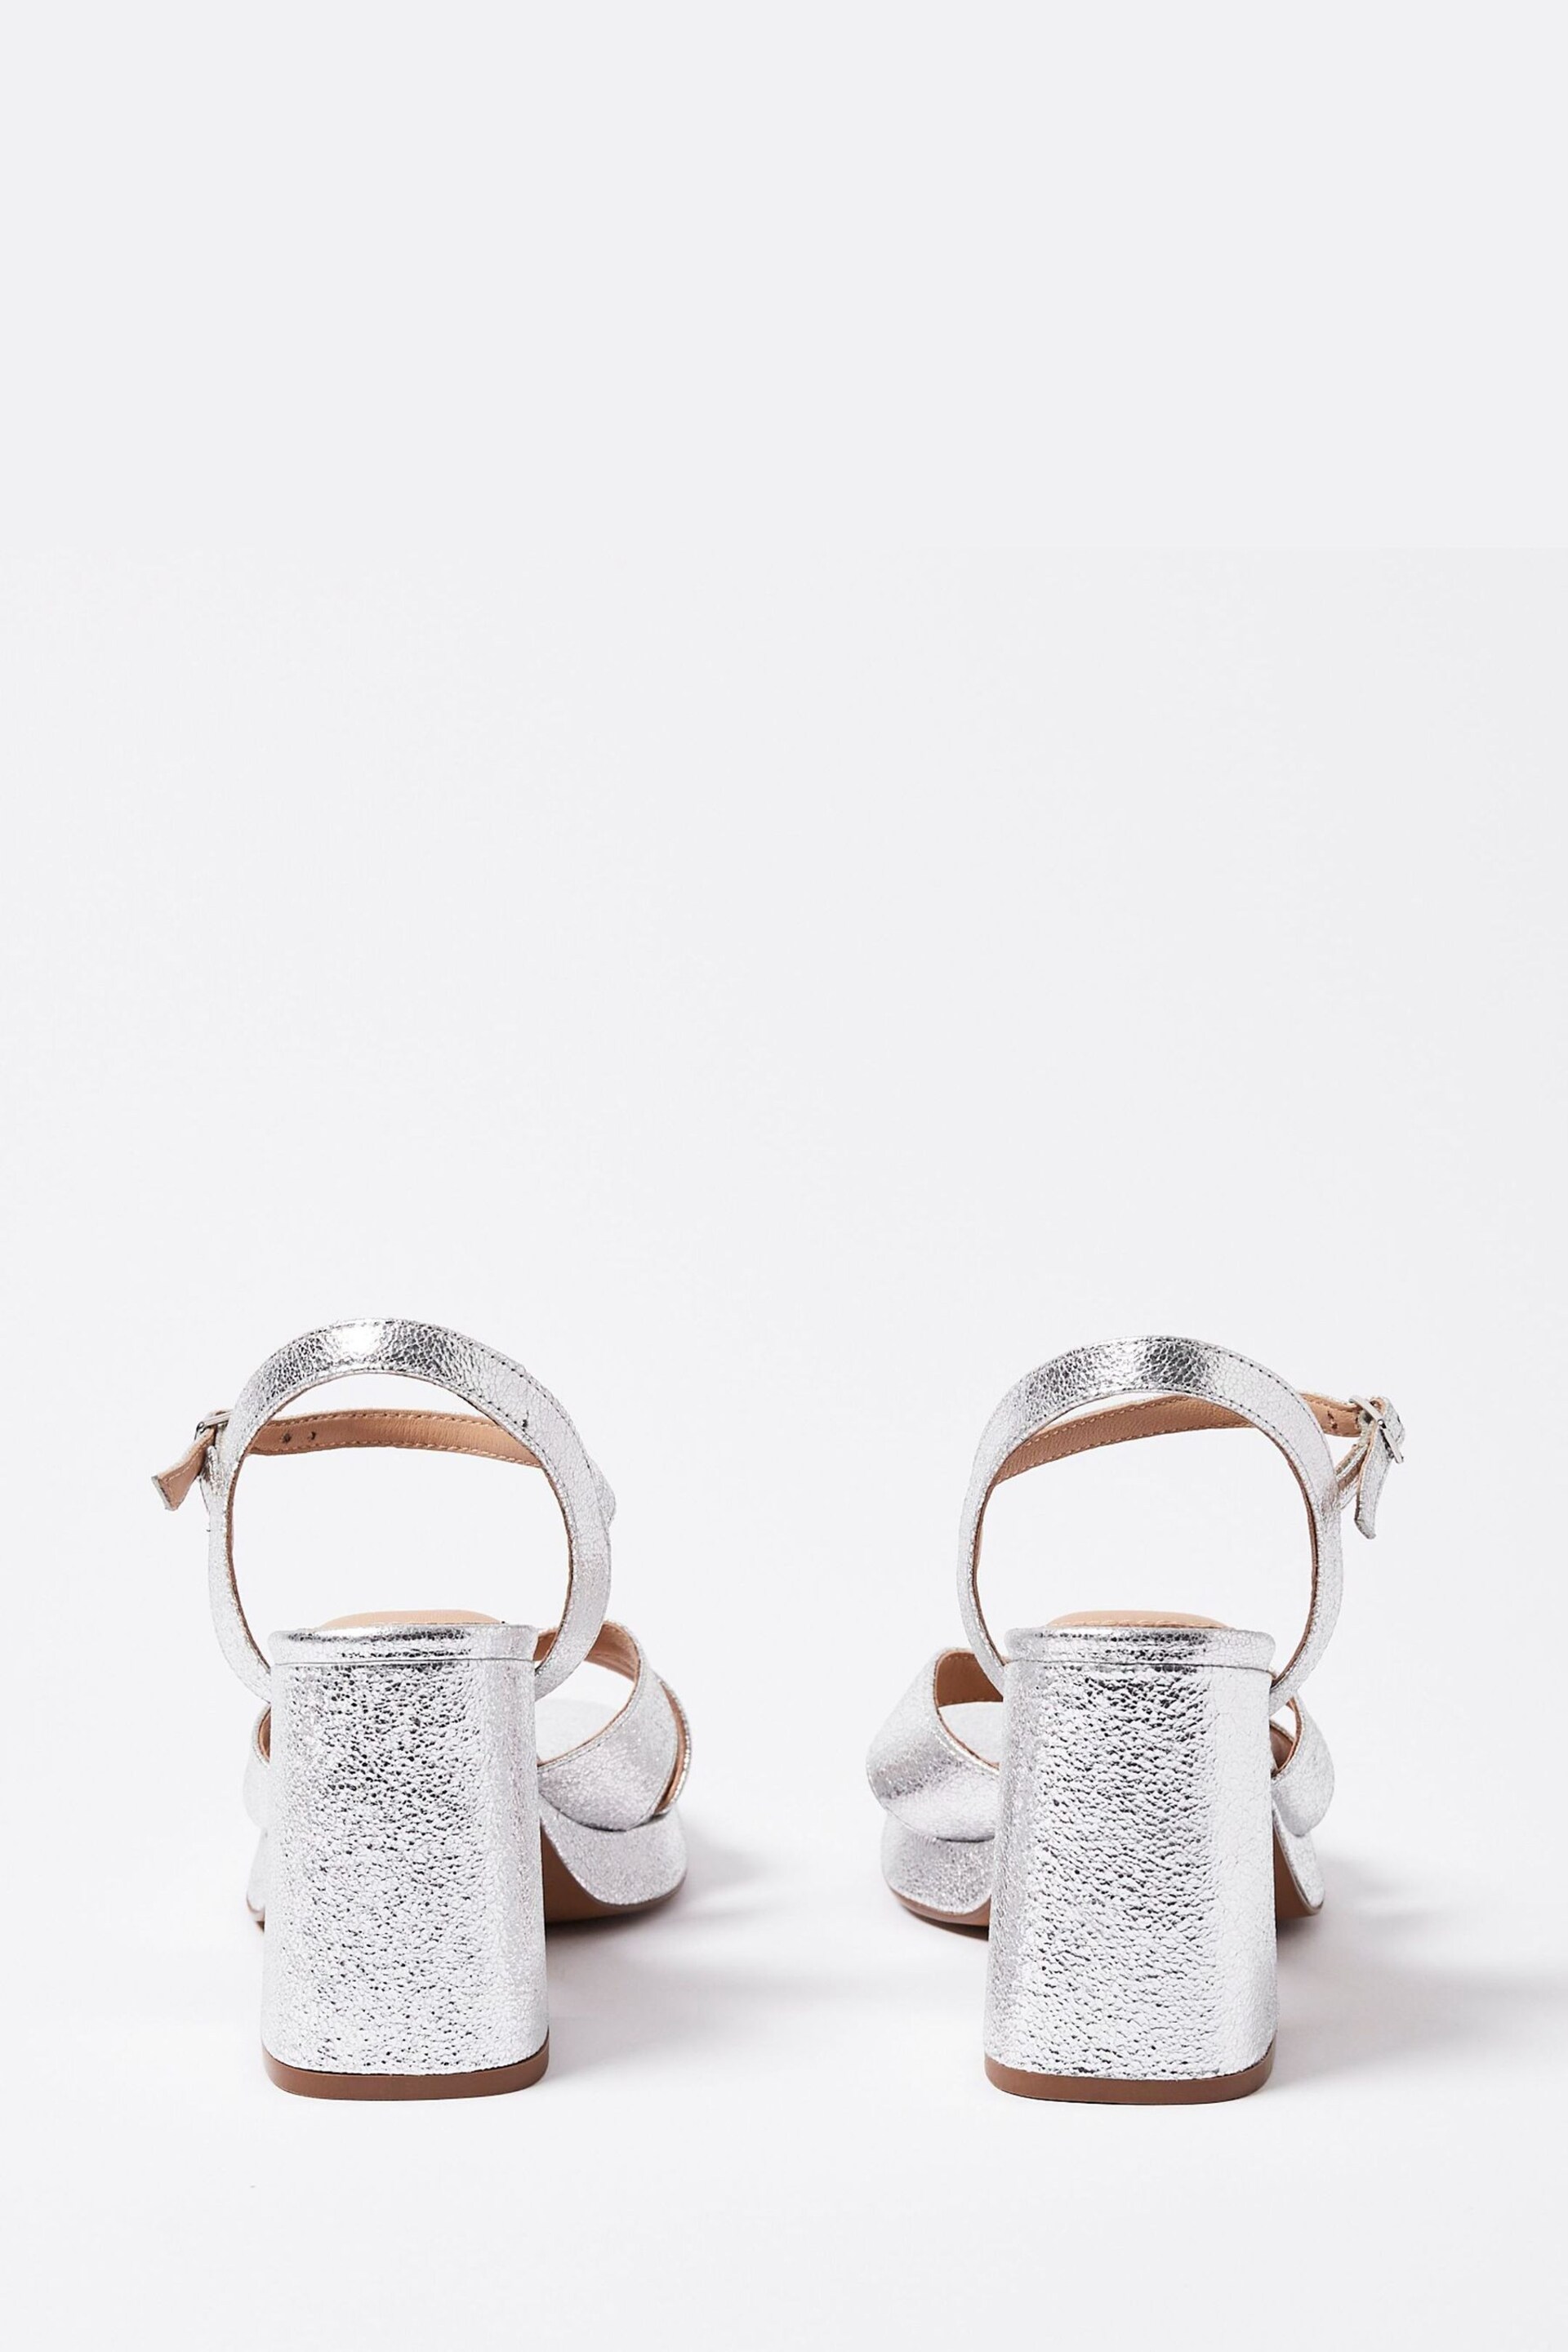 Oliver Bonas Silver Metallic Leather Heeled Platform Sandals - Image 2 of 8